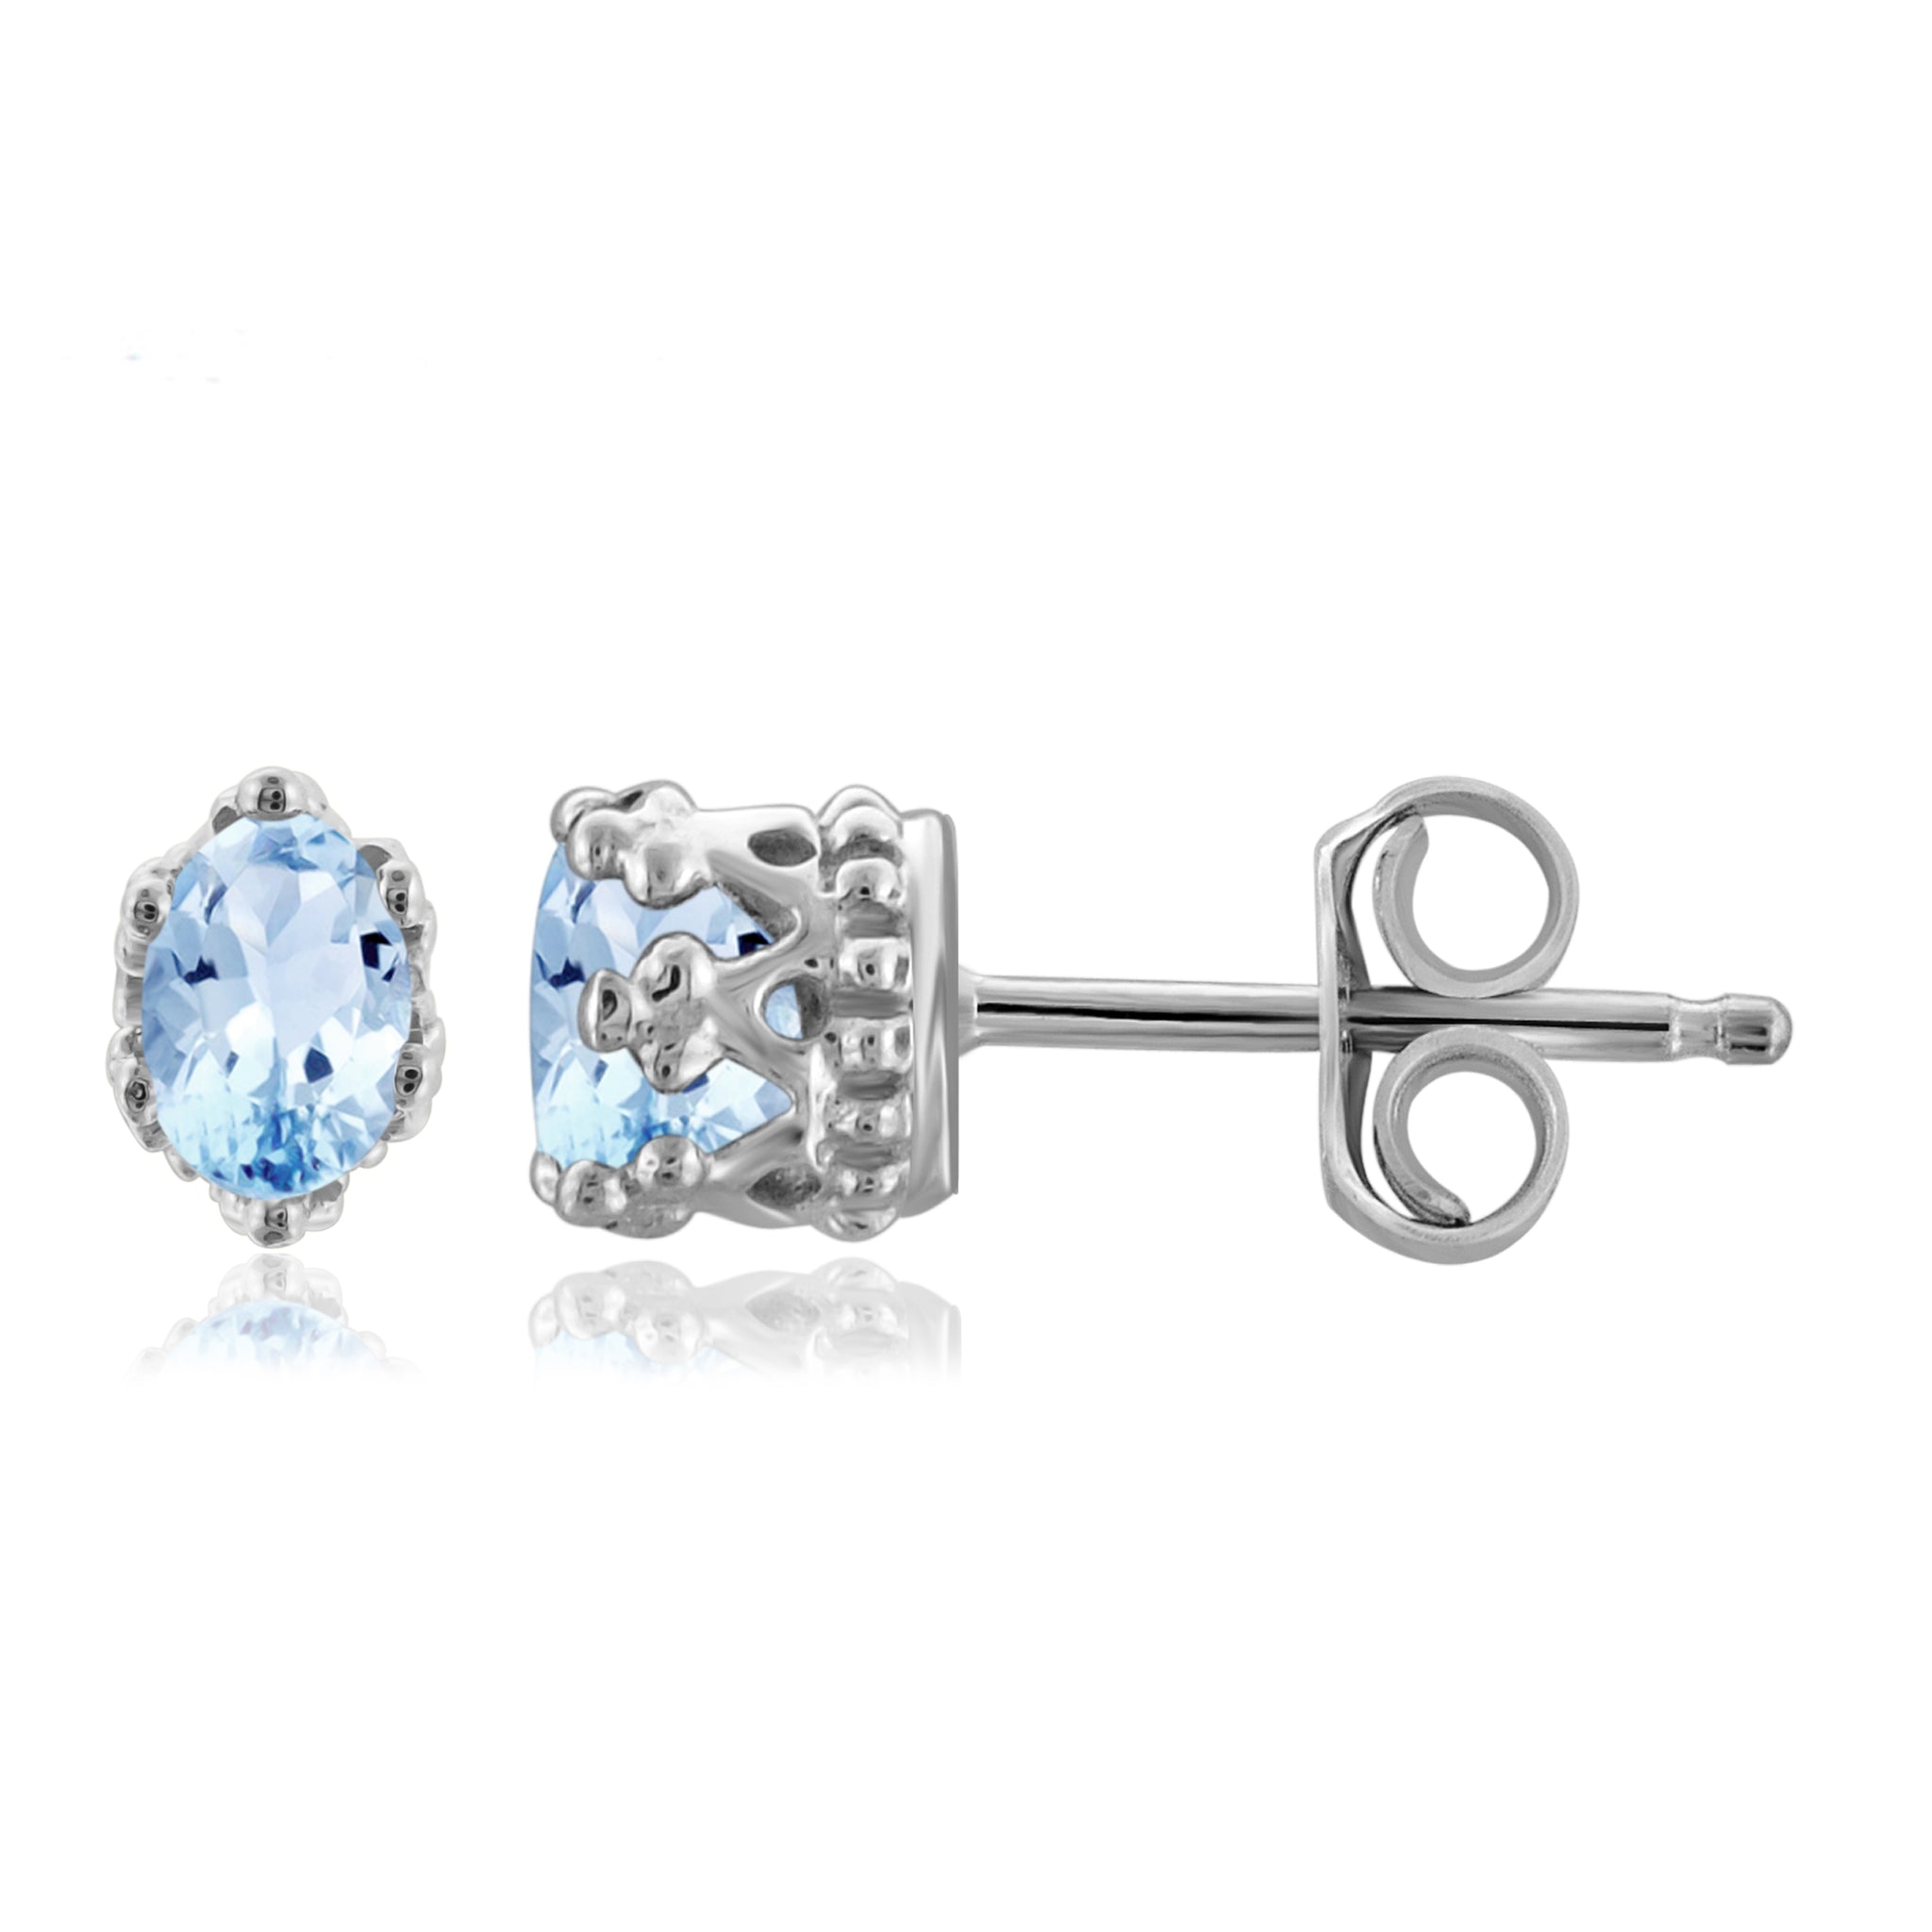 JewelonFire 1/2 Carat T.G.W. Sky Blue Topaz Sterling Silver Crown Earrings - Assorted Colors